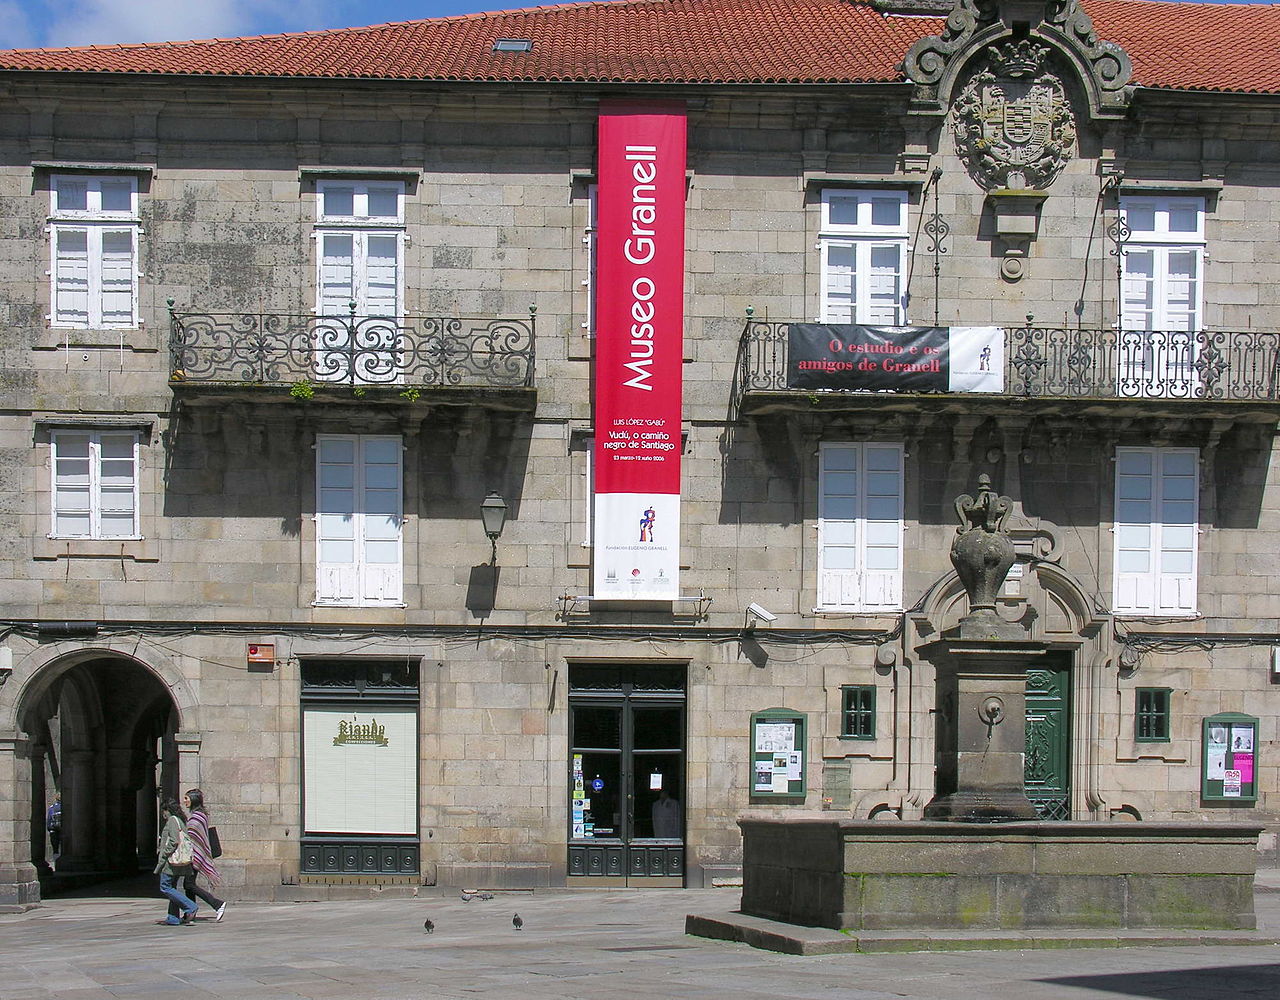 Museo Granell, Santiago de Compostela | ©Luis Miguel Bugallo Sánchez / Wikimedia Commons